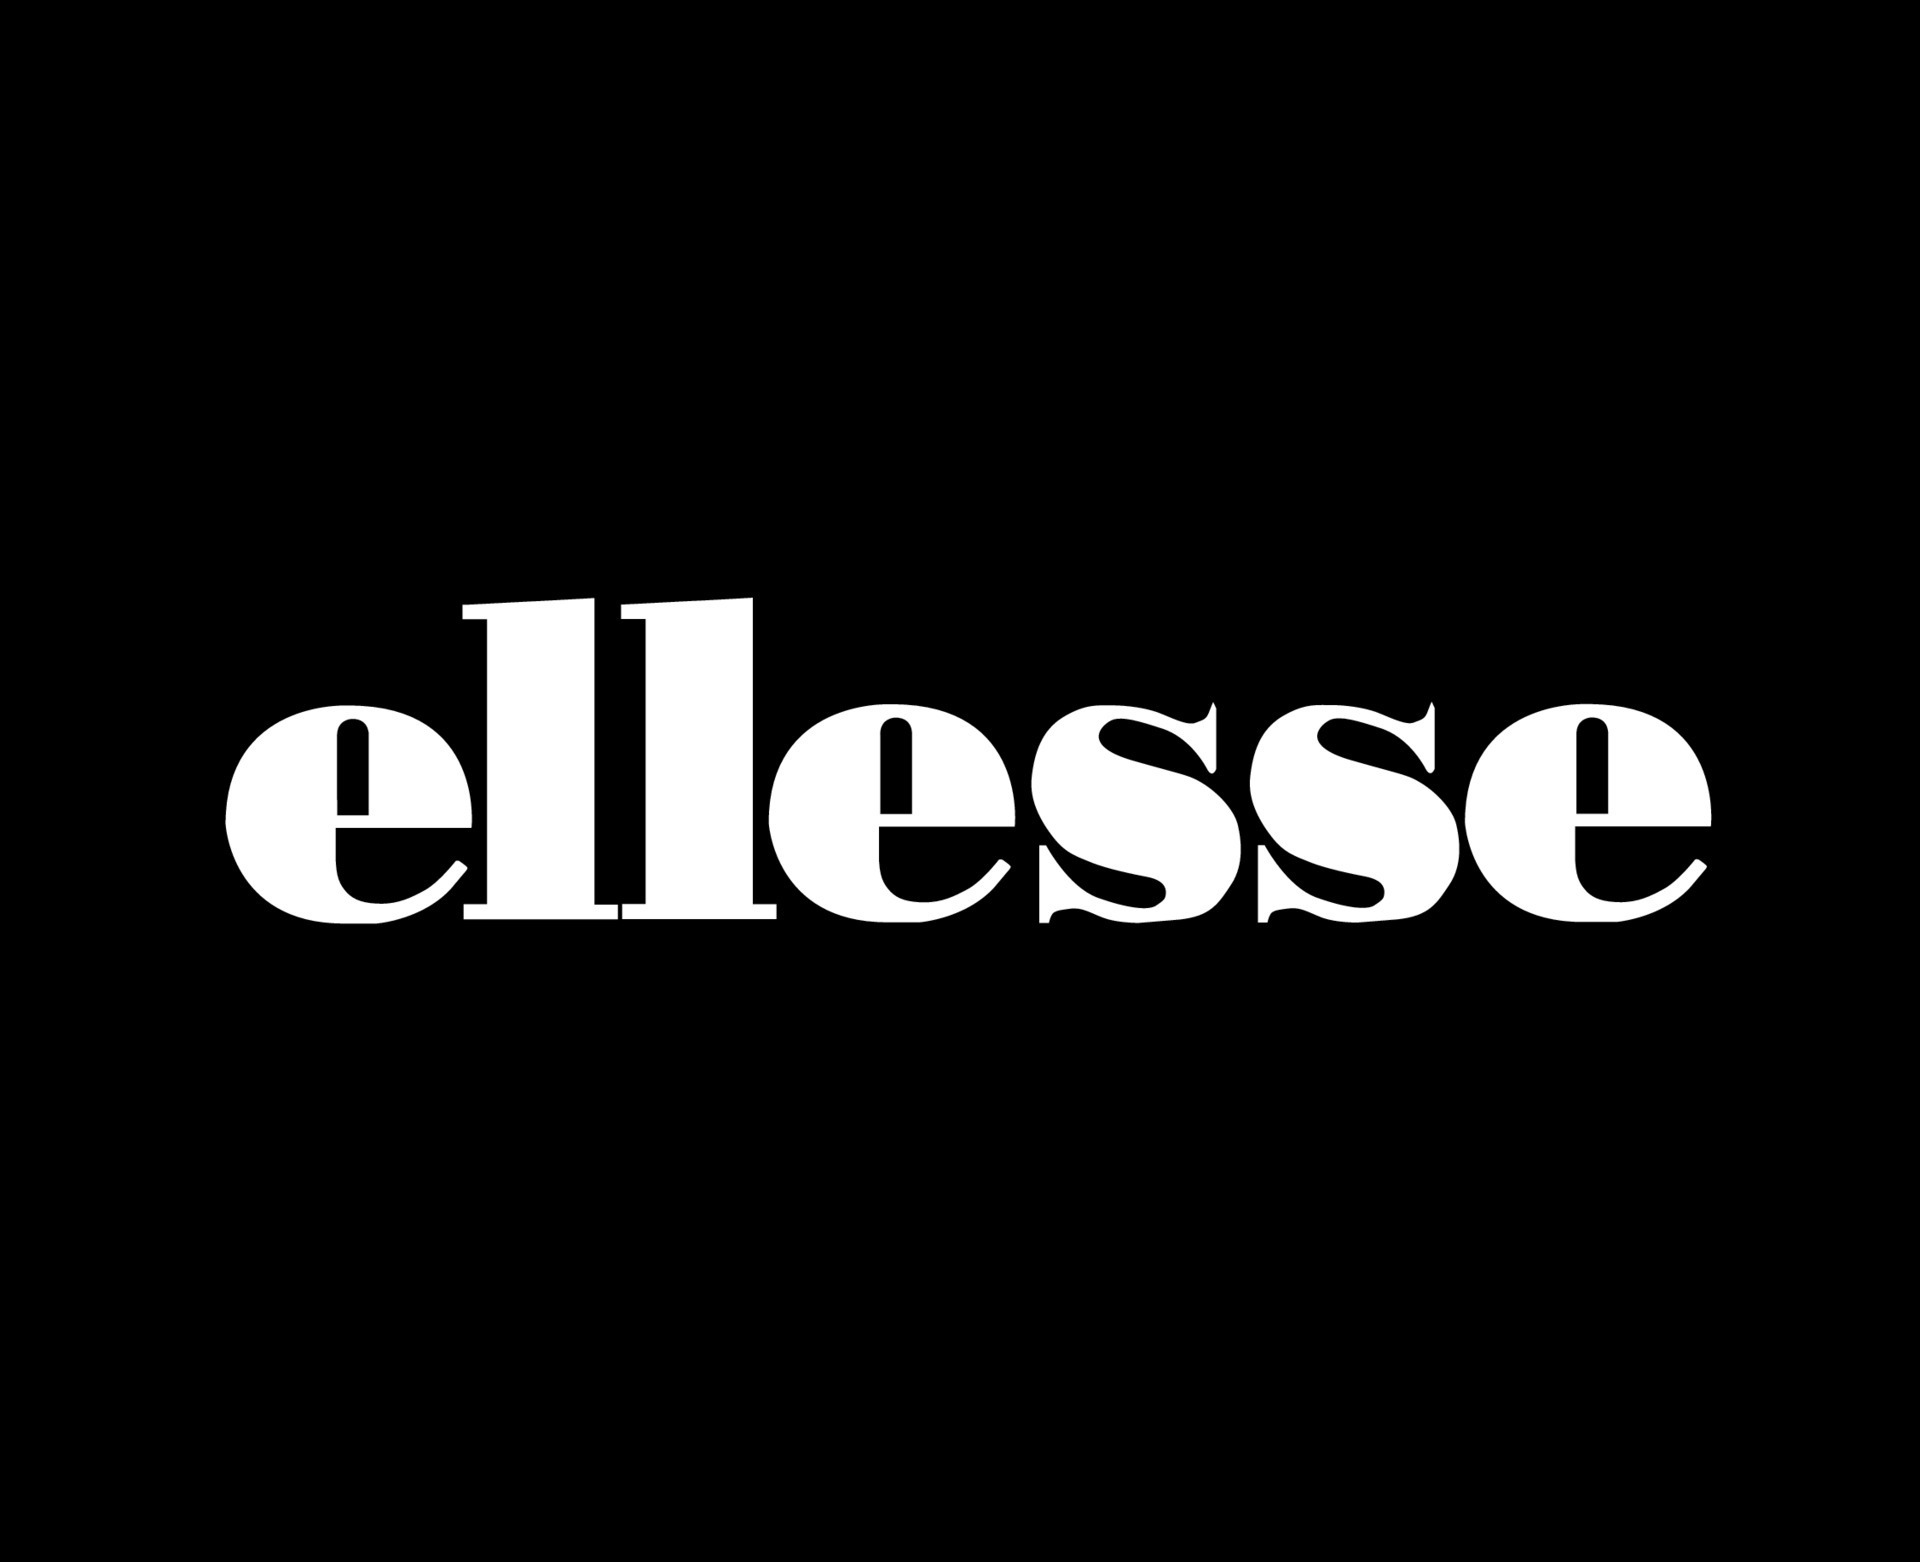 Ellesse Brand Logo Name White Symbol Design Clothes Fashion Vector  Illustration With Black Background 23870040 Vector Art at Vecteezy